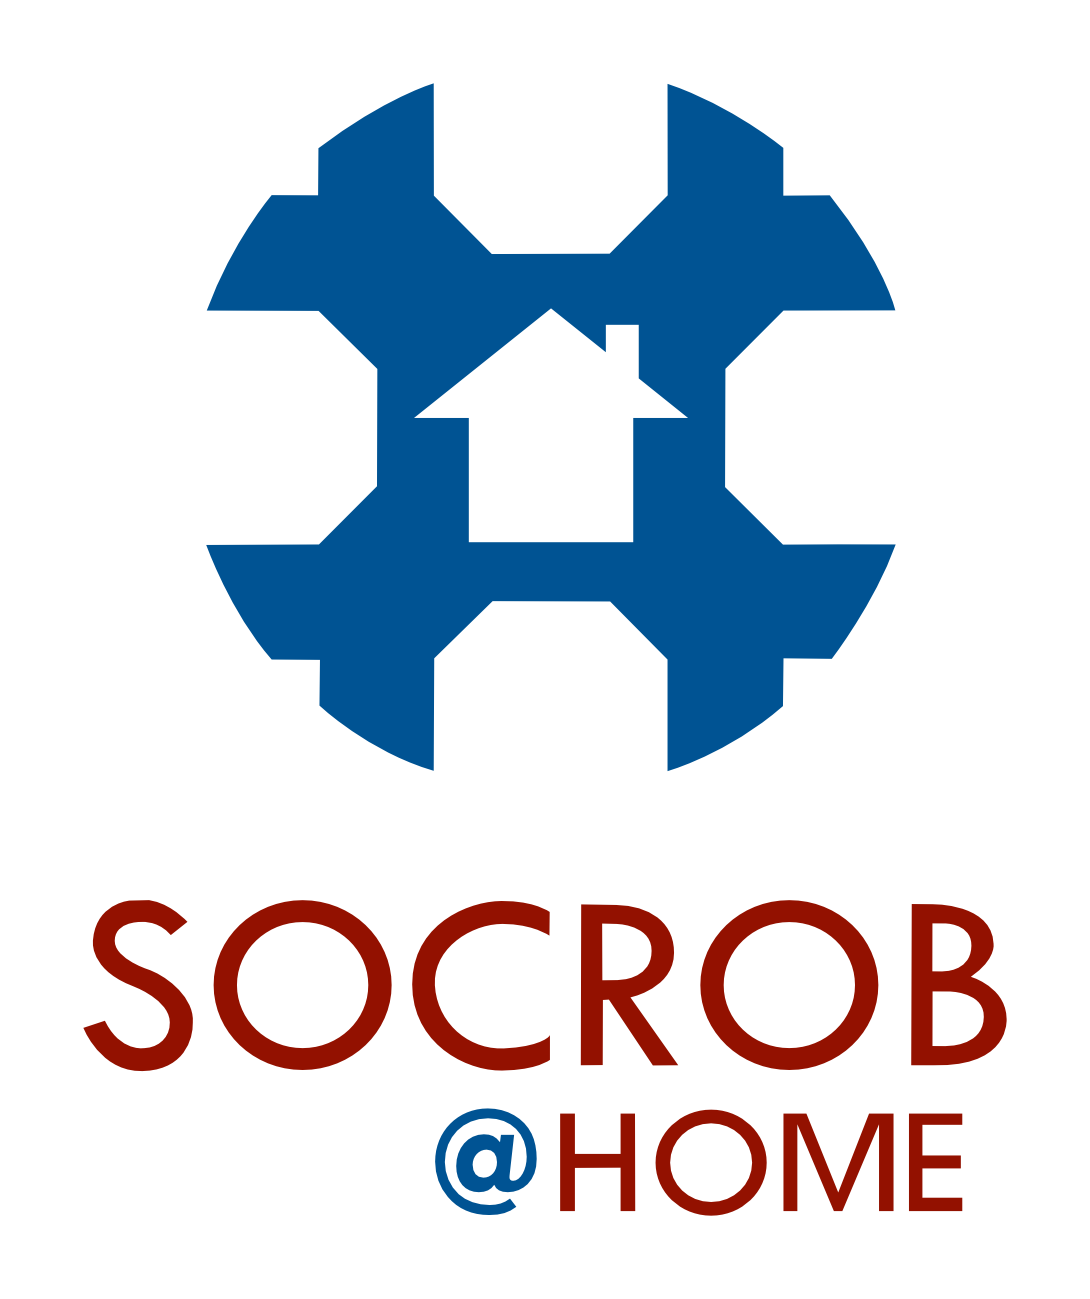 socrob_home_logo.png